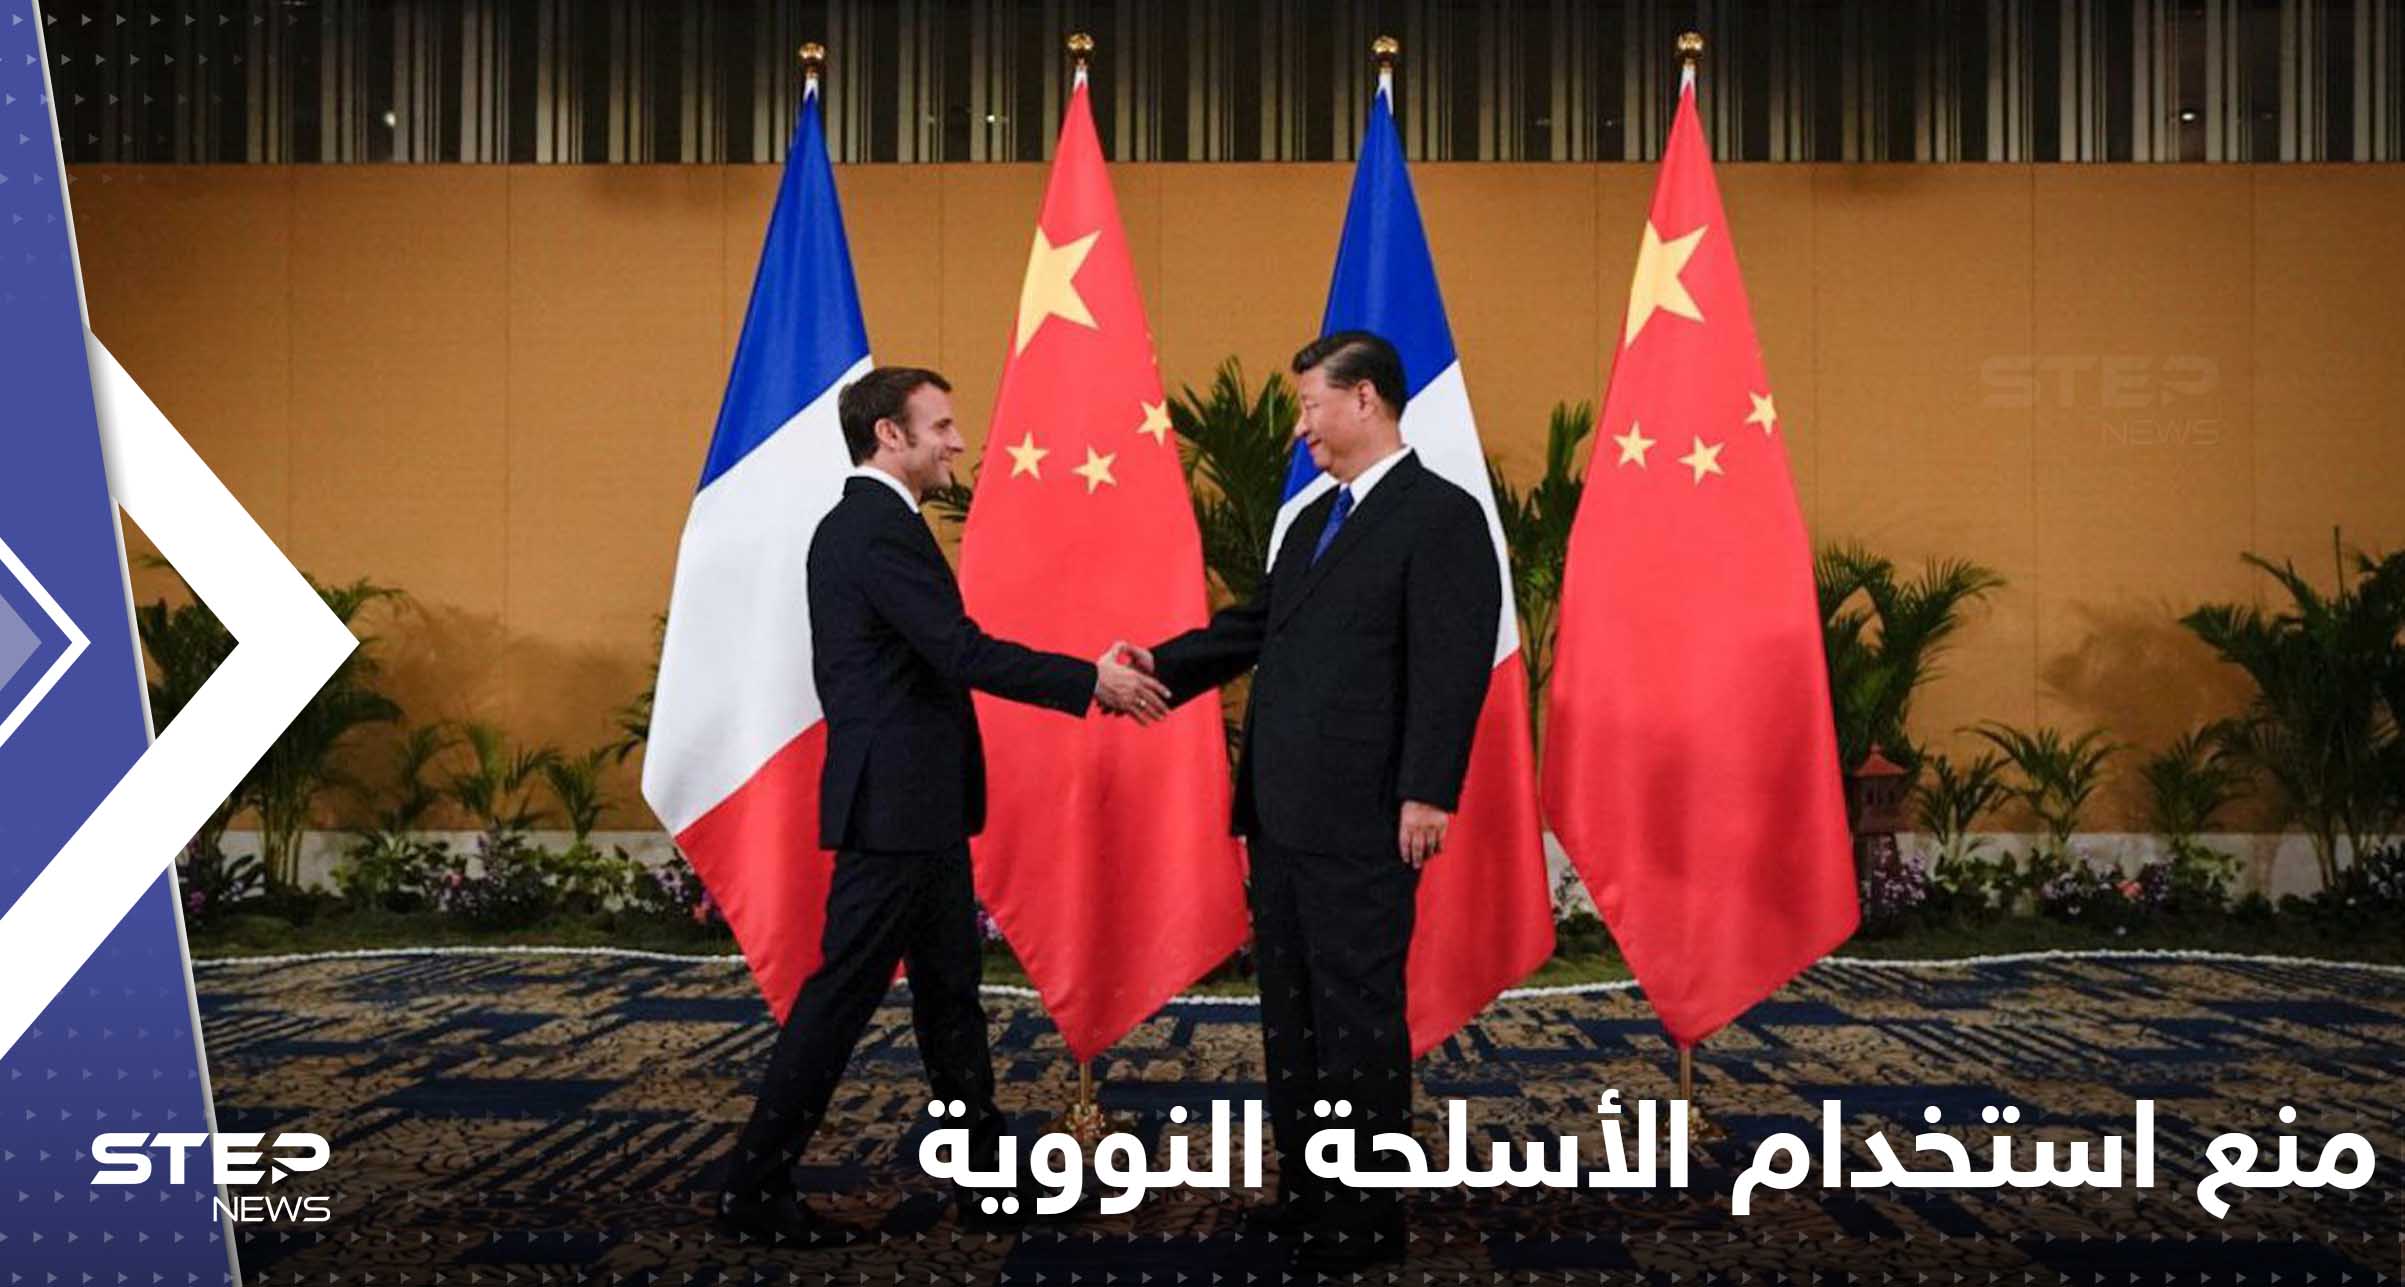 فرنسا والصين